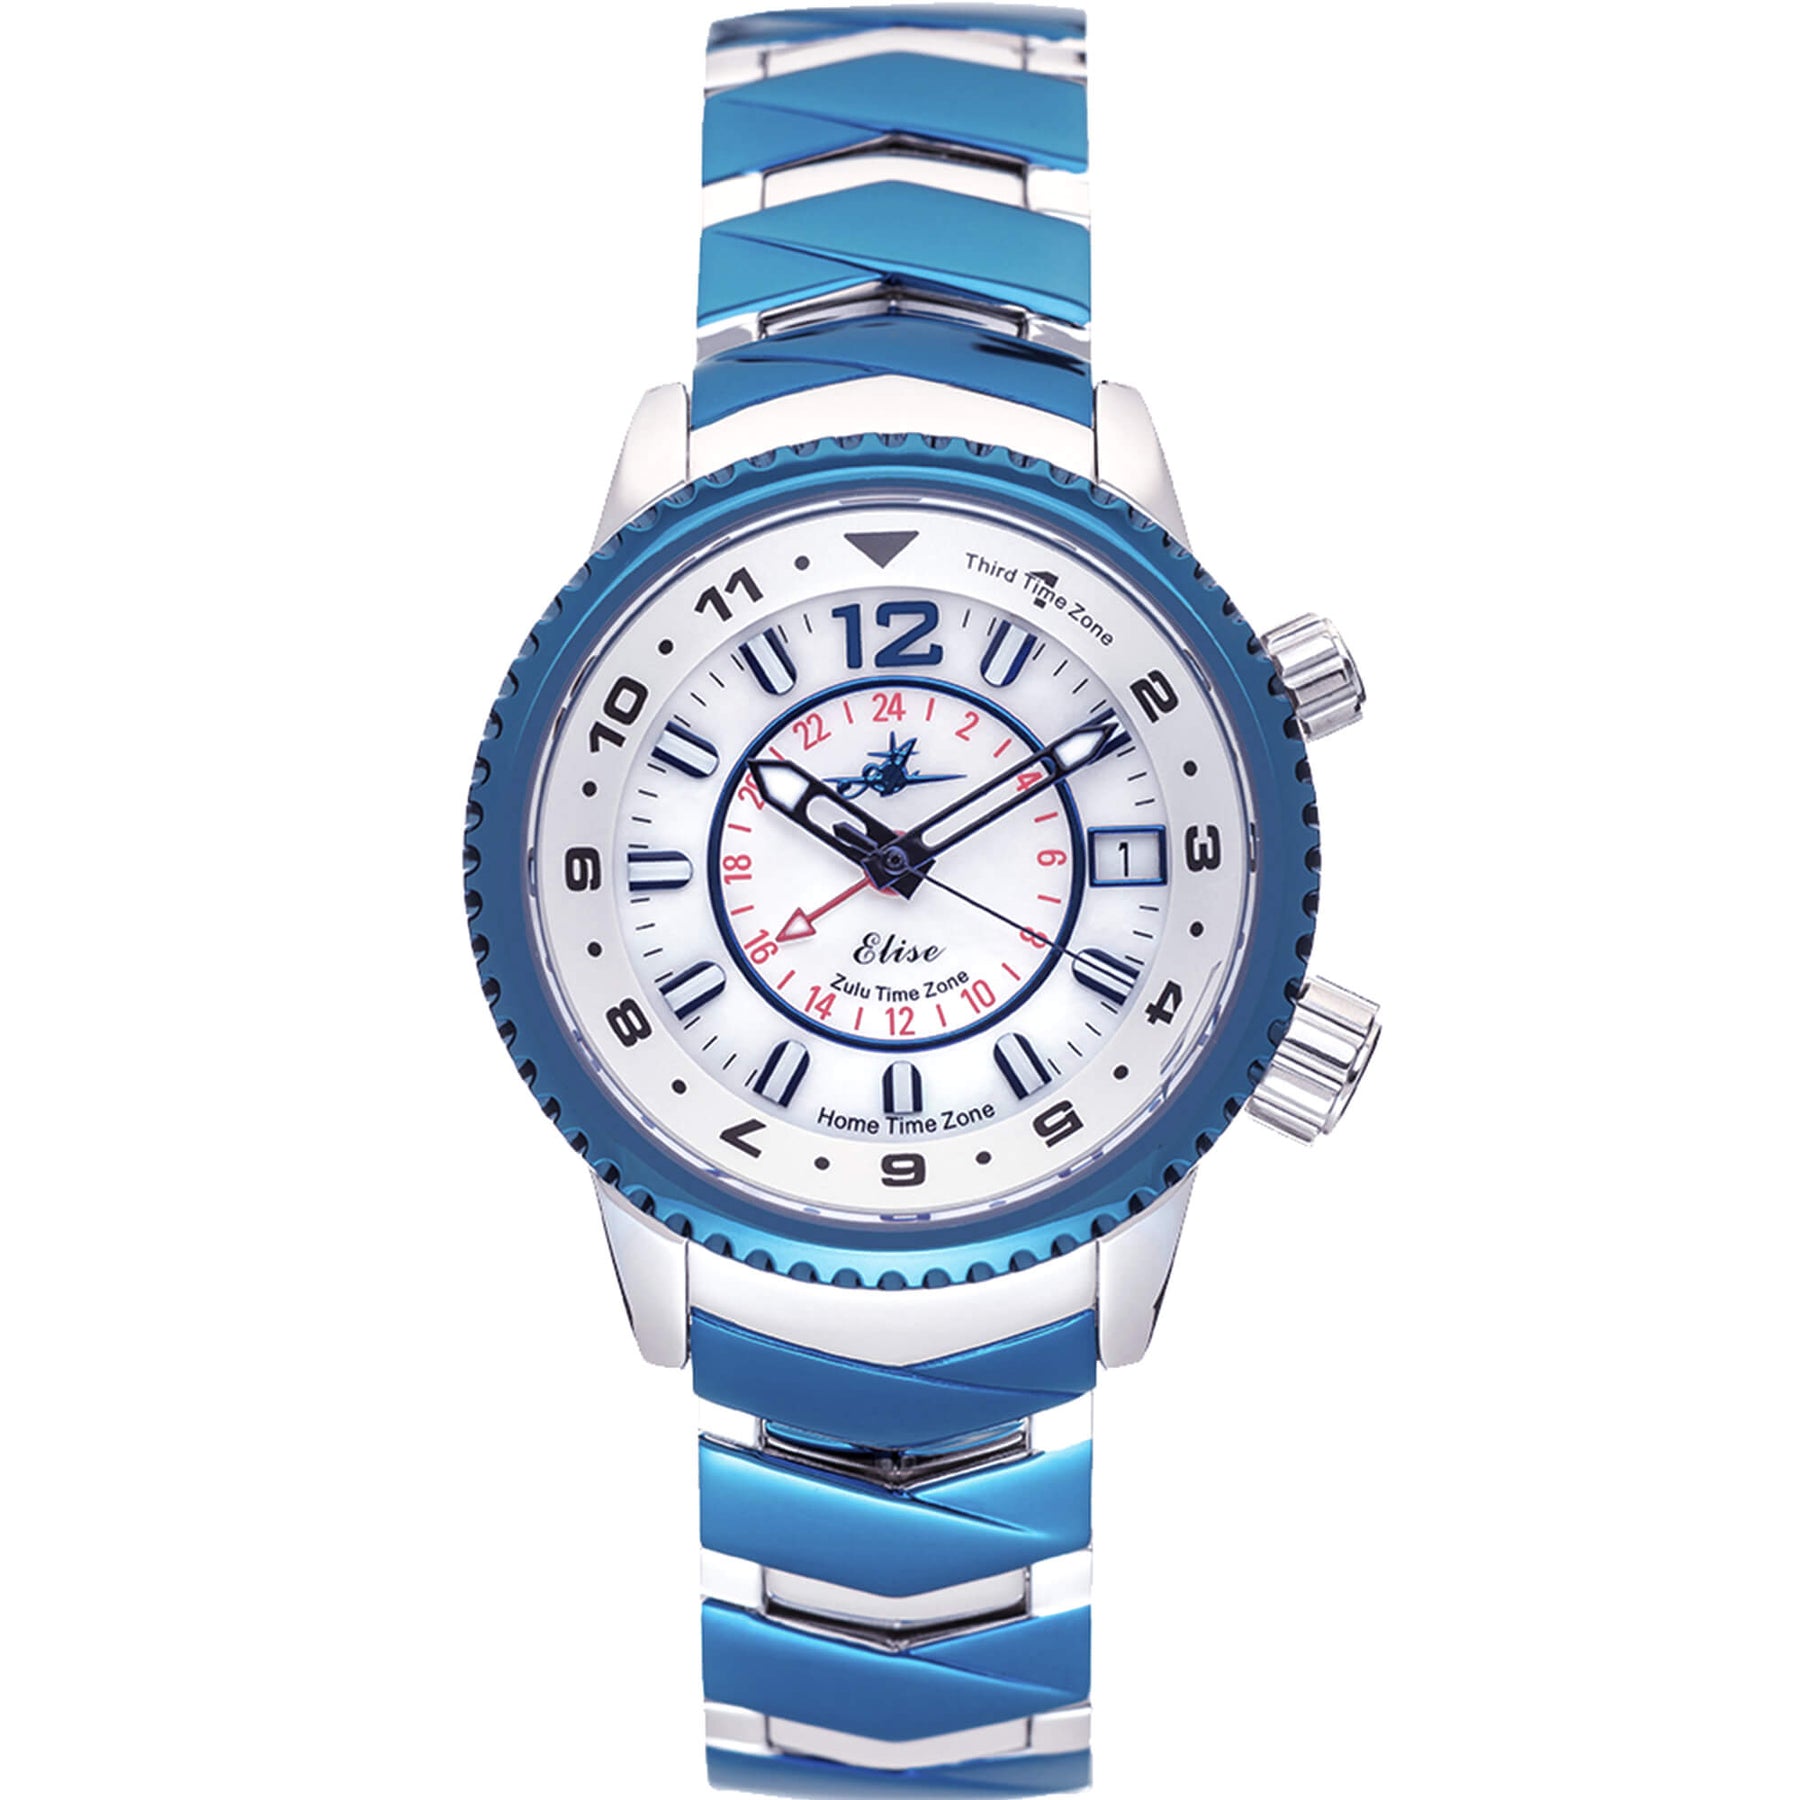 Cartier Ballon Bleu Two Timezone Rose Gold & Stainless Steel Watch